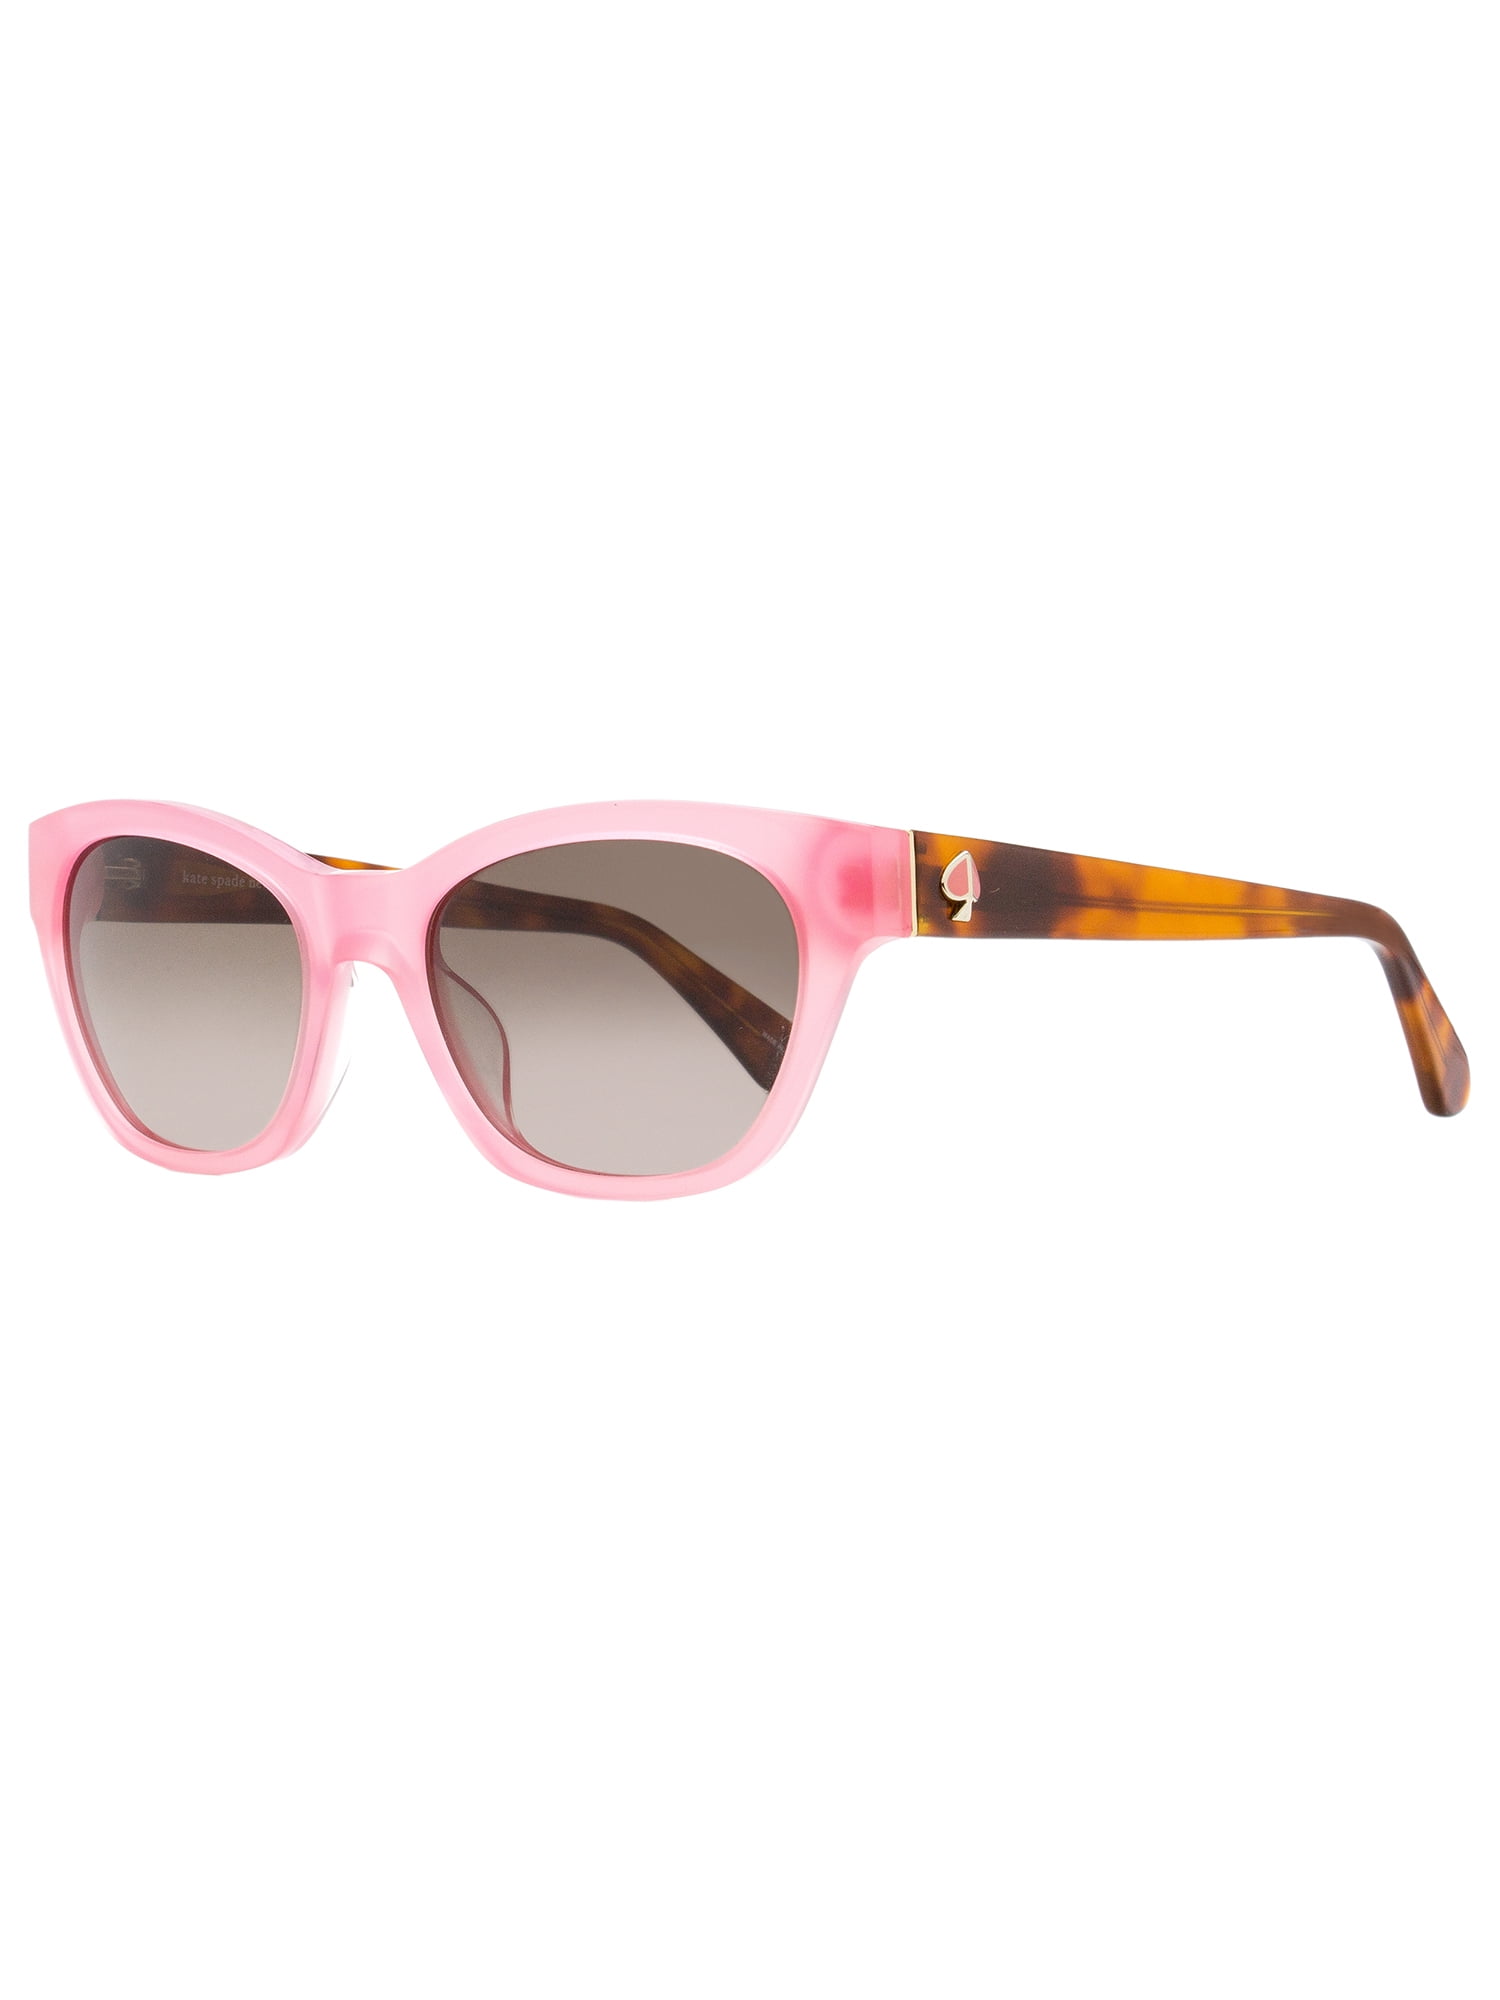 Kate Spade Petite Sunglasses Jerri/S 35JFF Pink/Havana 50mm - Walmart.com